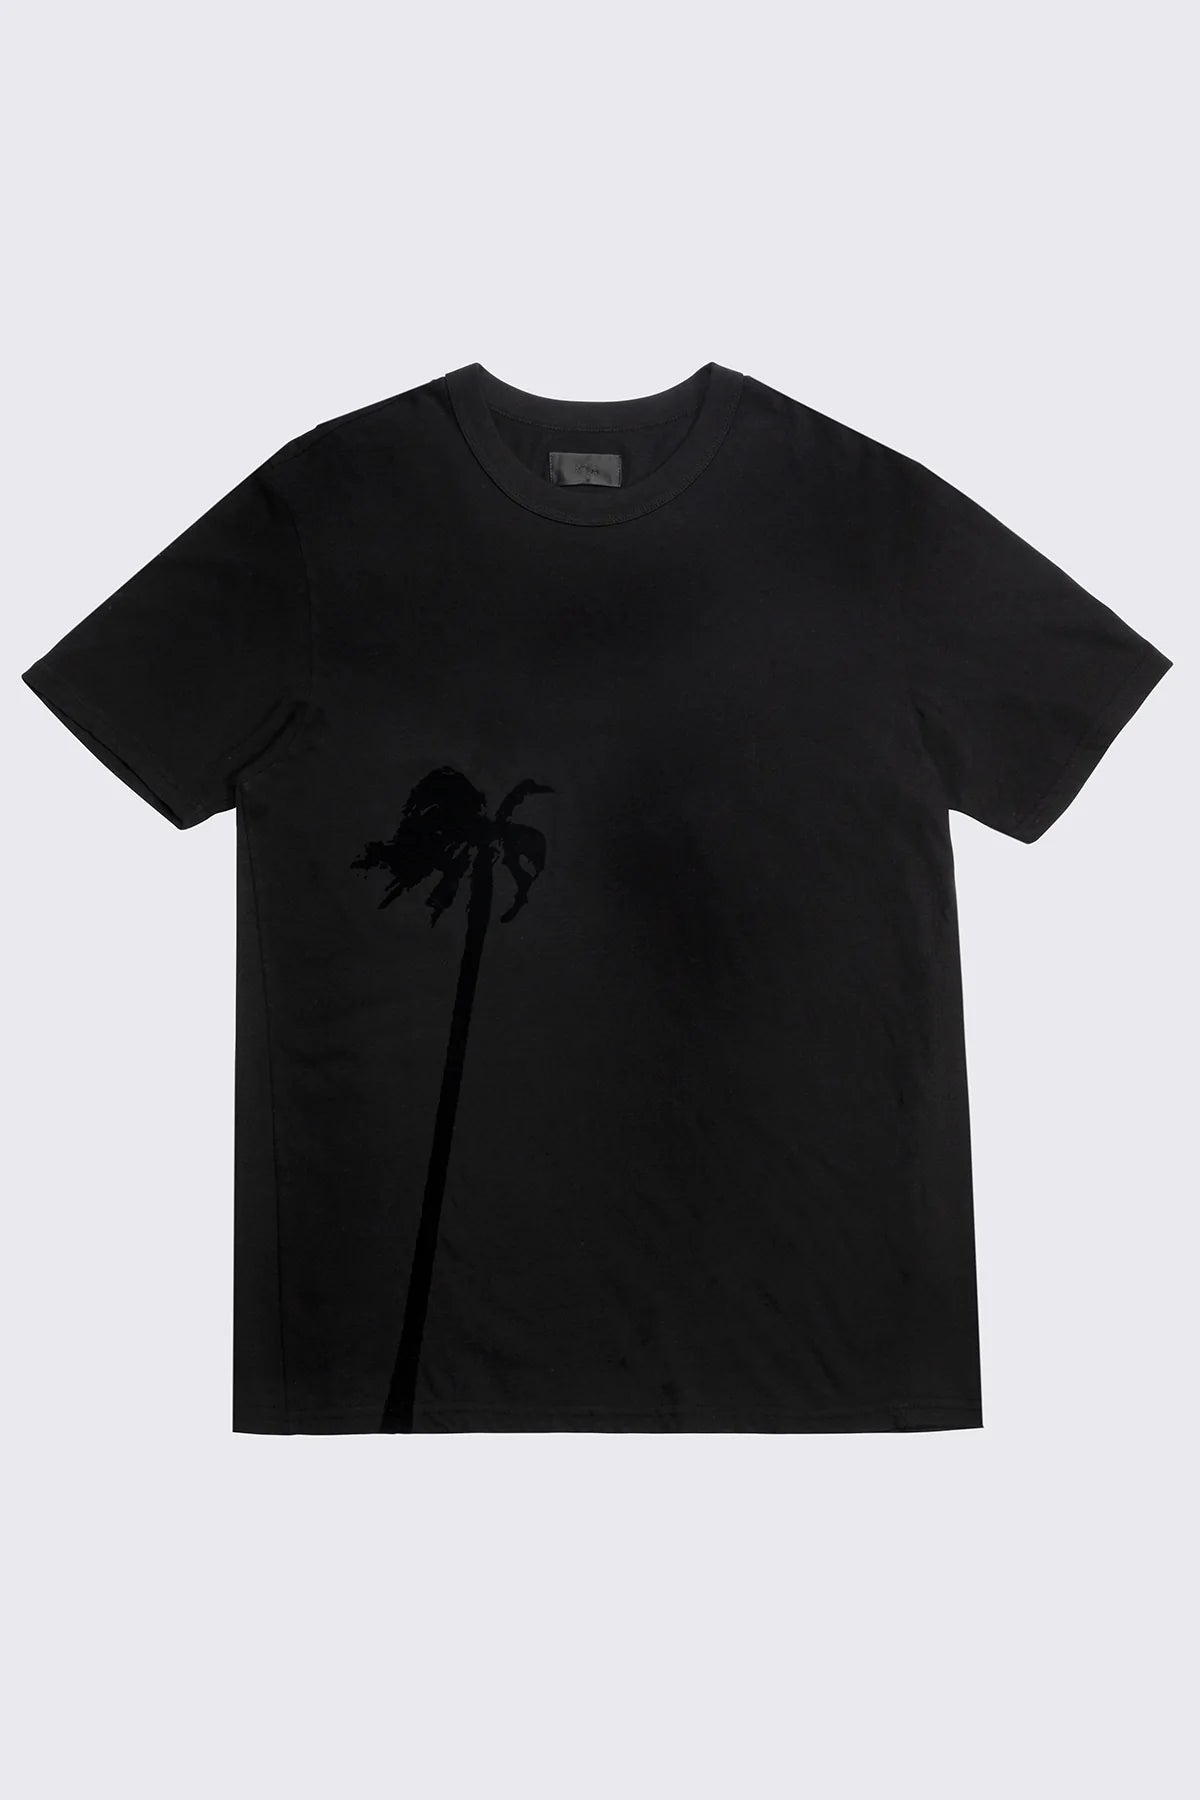 Pablo-Black Palm Tree